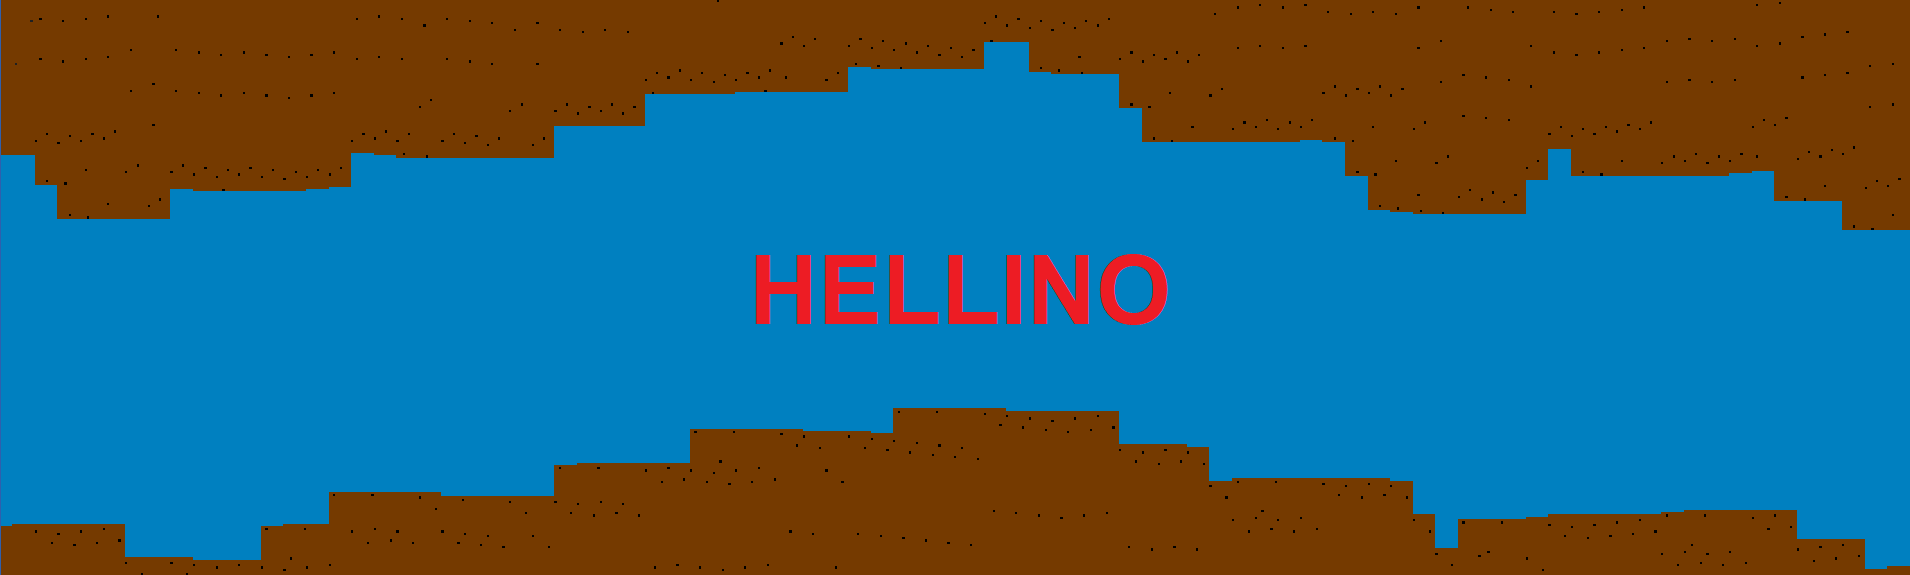 Hellino